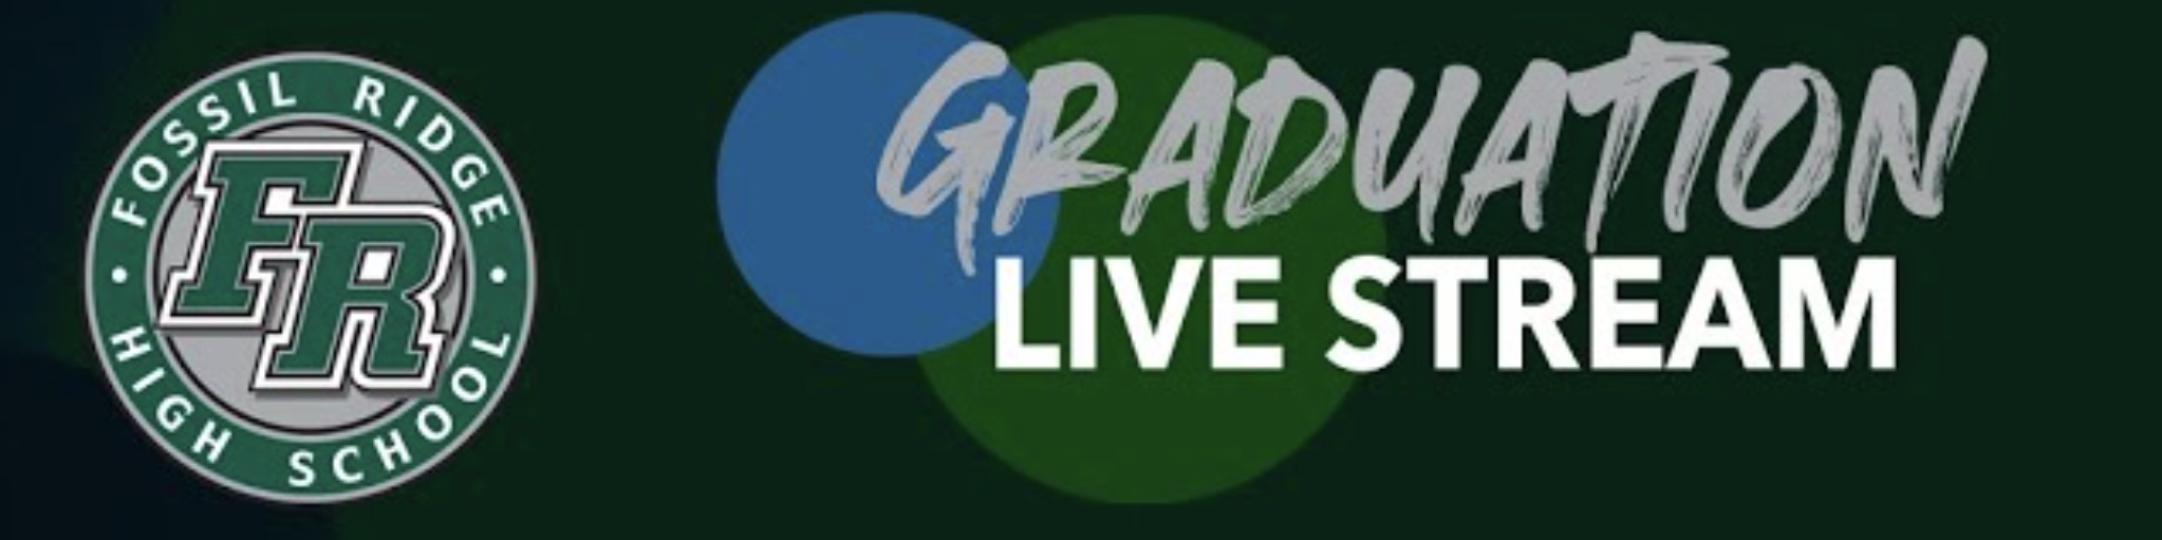 Graduation Live Stream